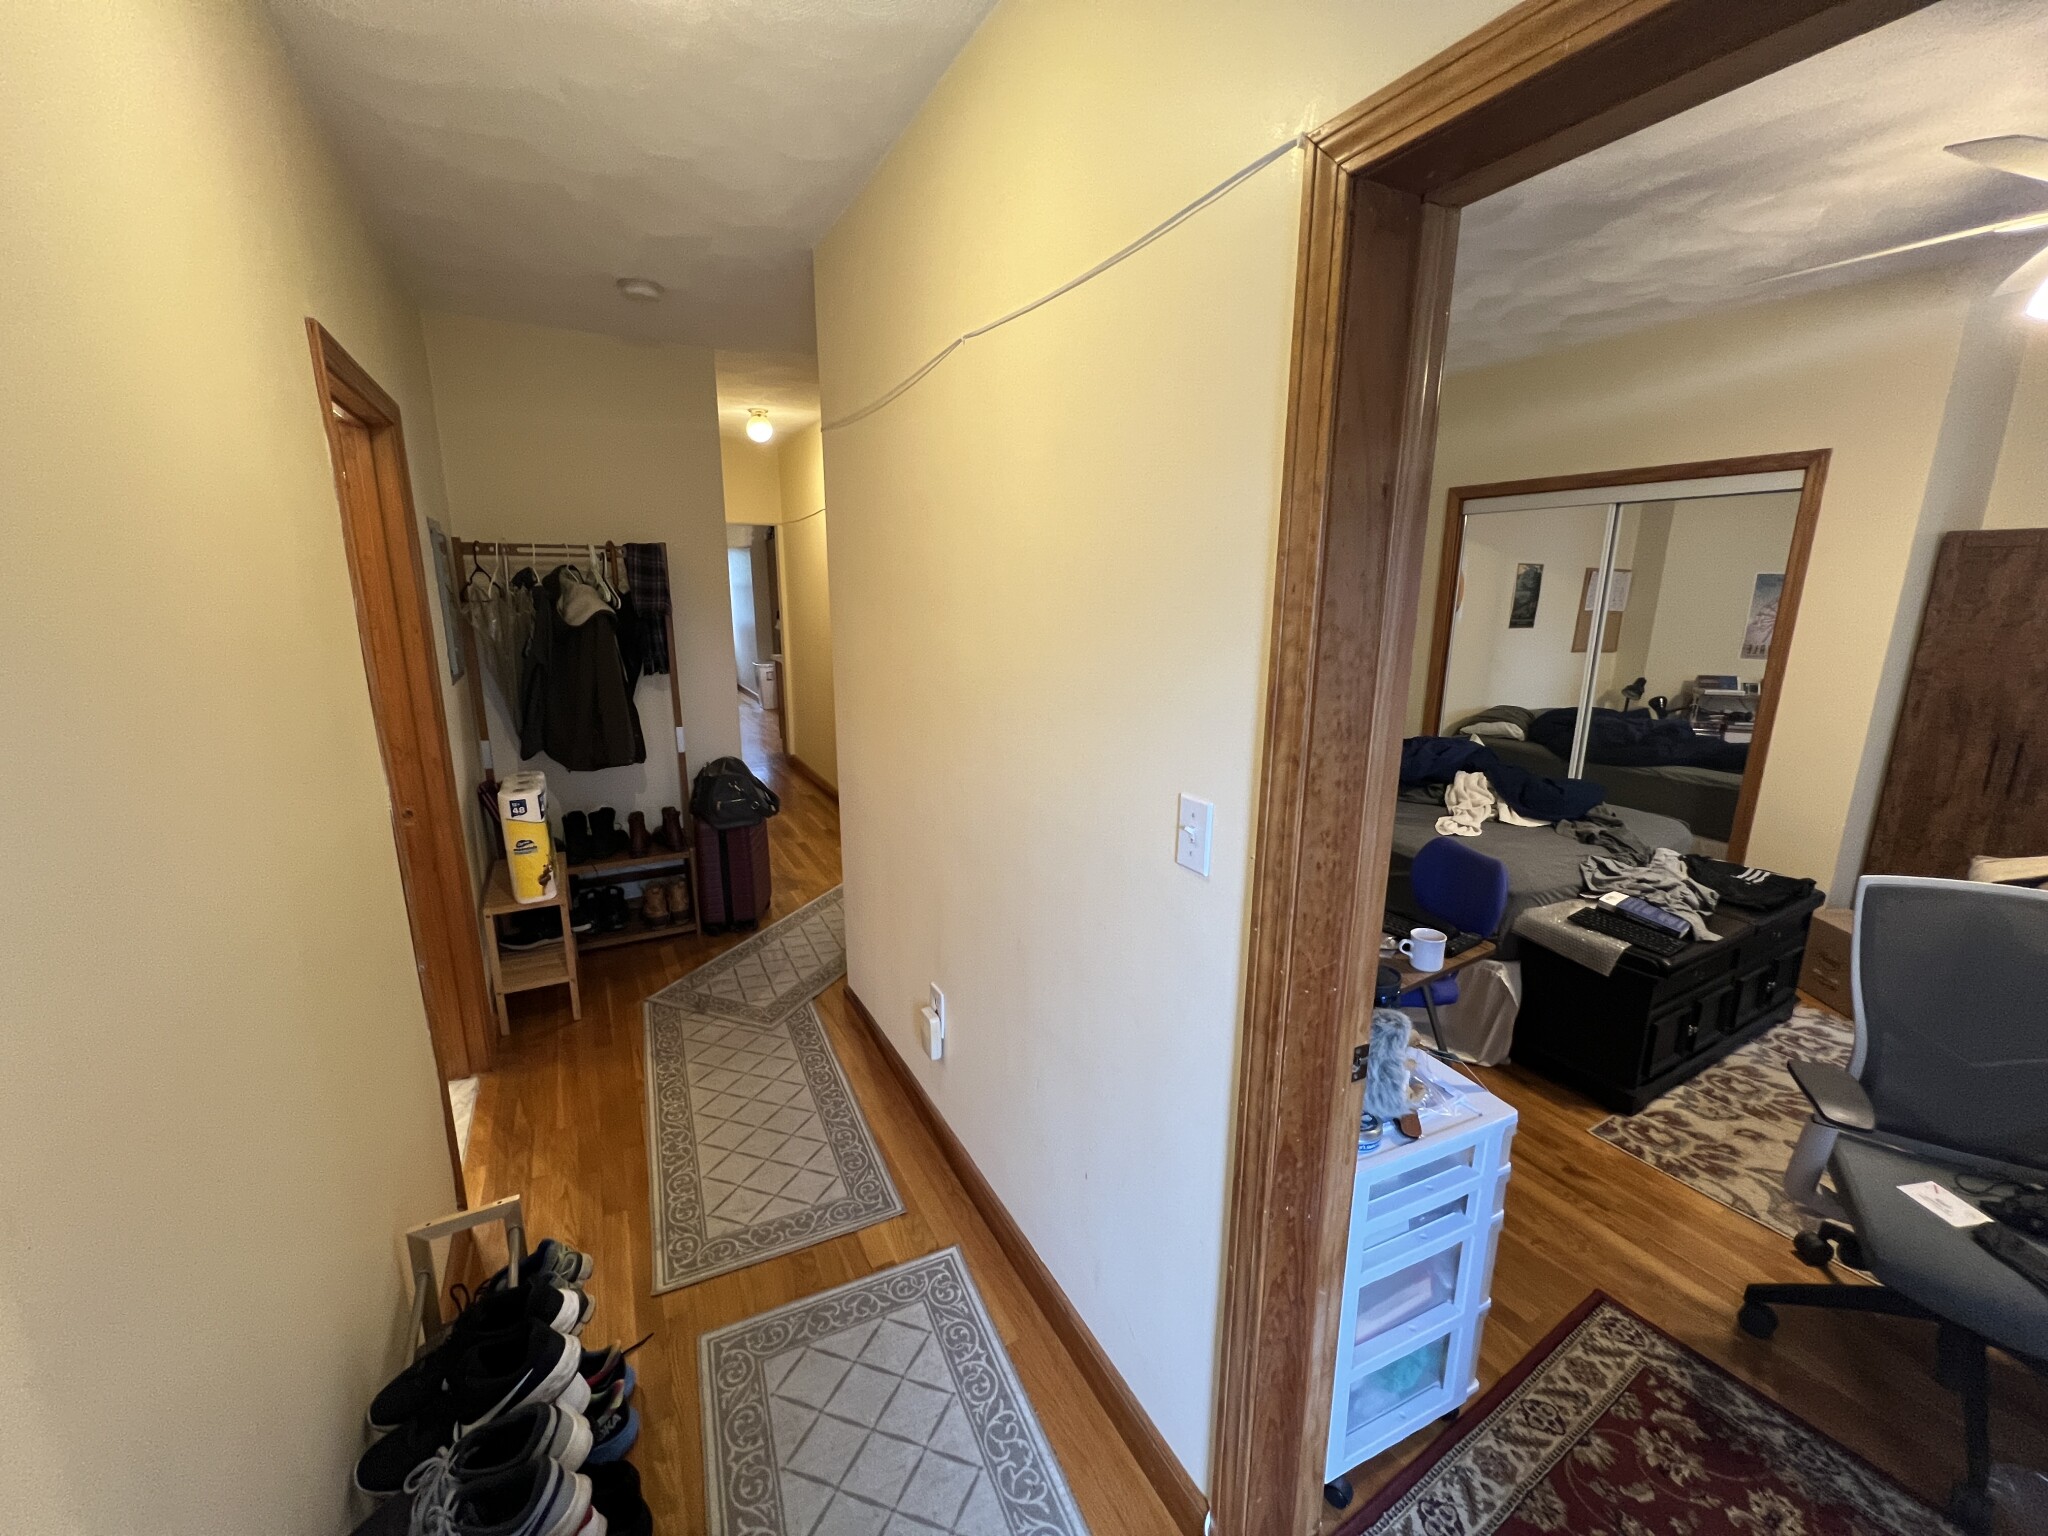 Photos of apartment on Hancock St.,Somerville MA 02144